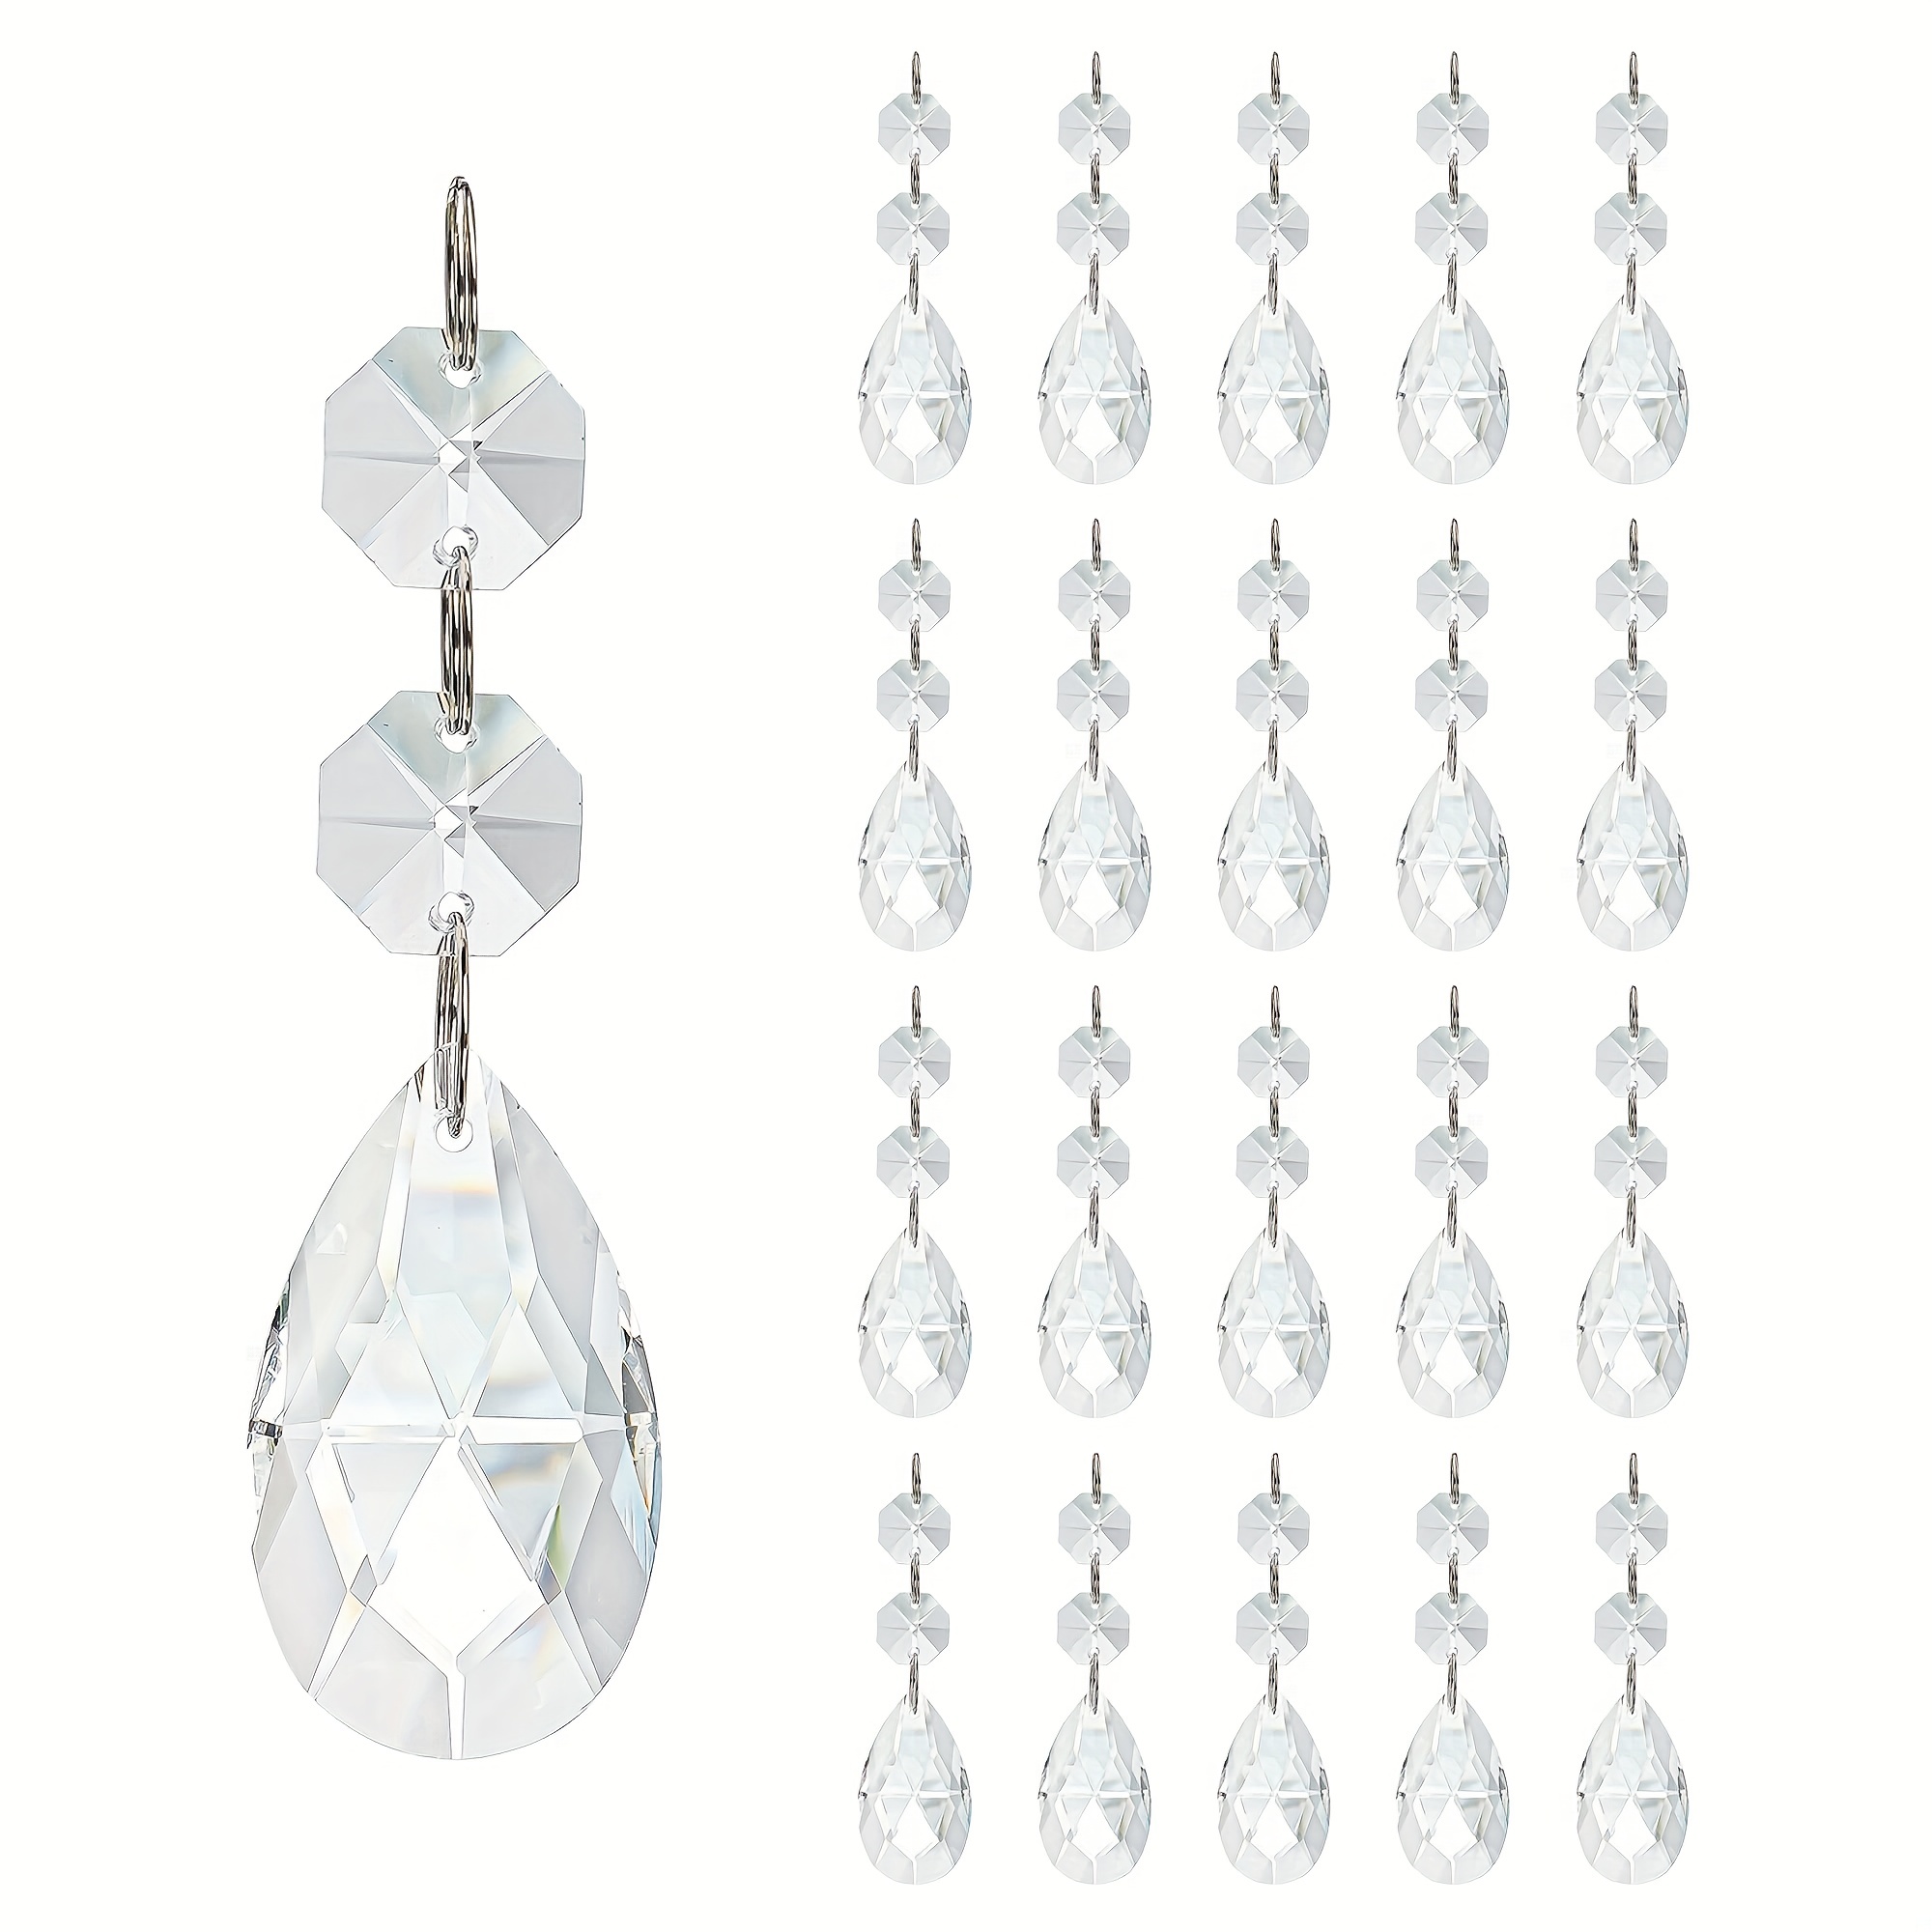 10pcs Teardrop Crystal Strands, Hanging Beads Chain Chandelier Prism  Pendant